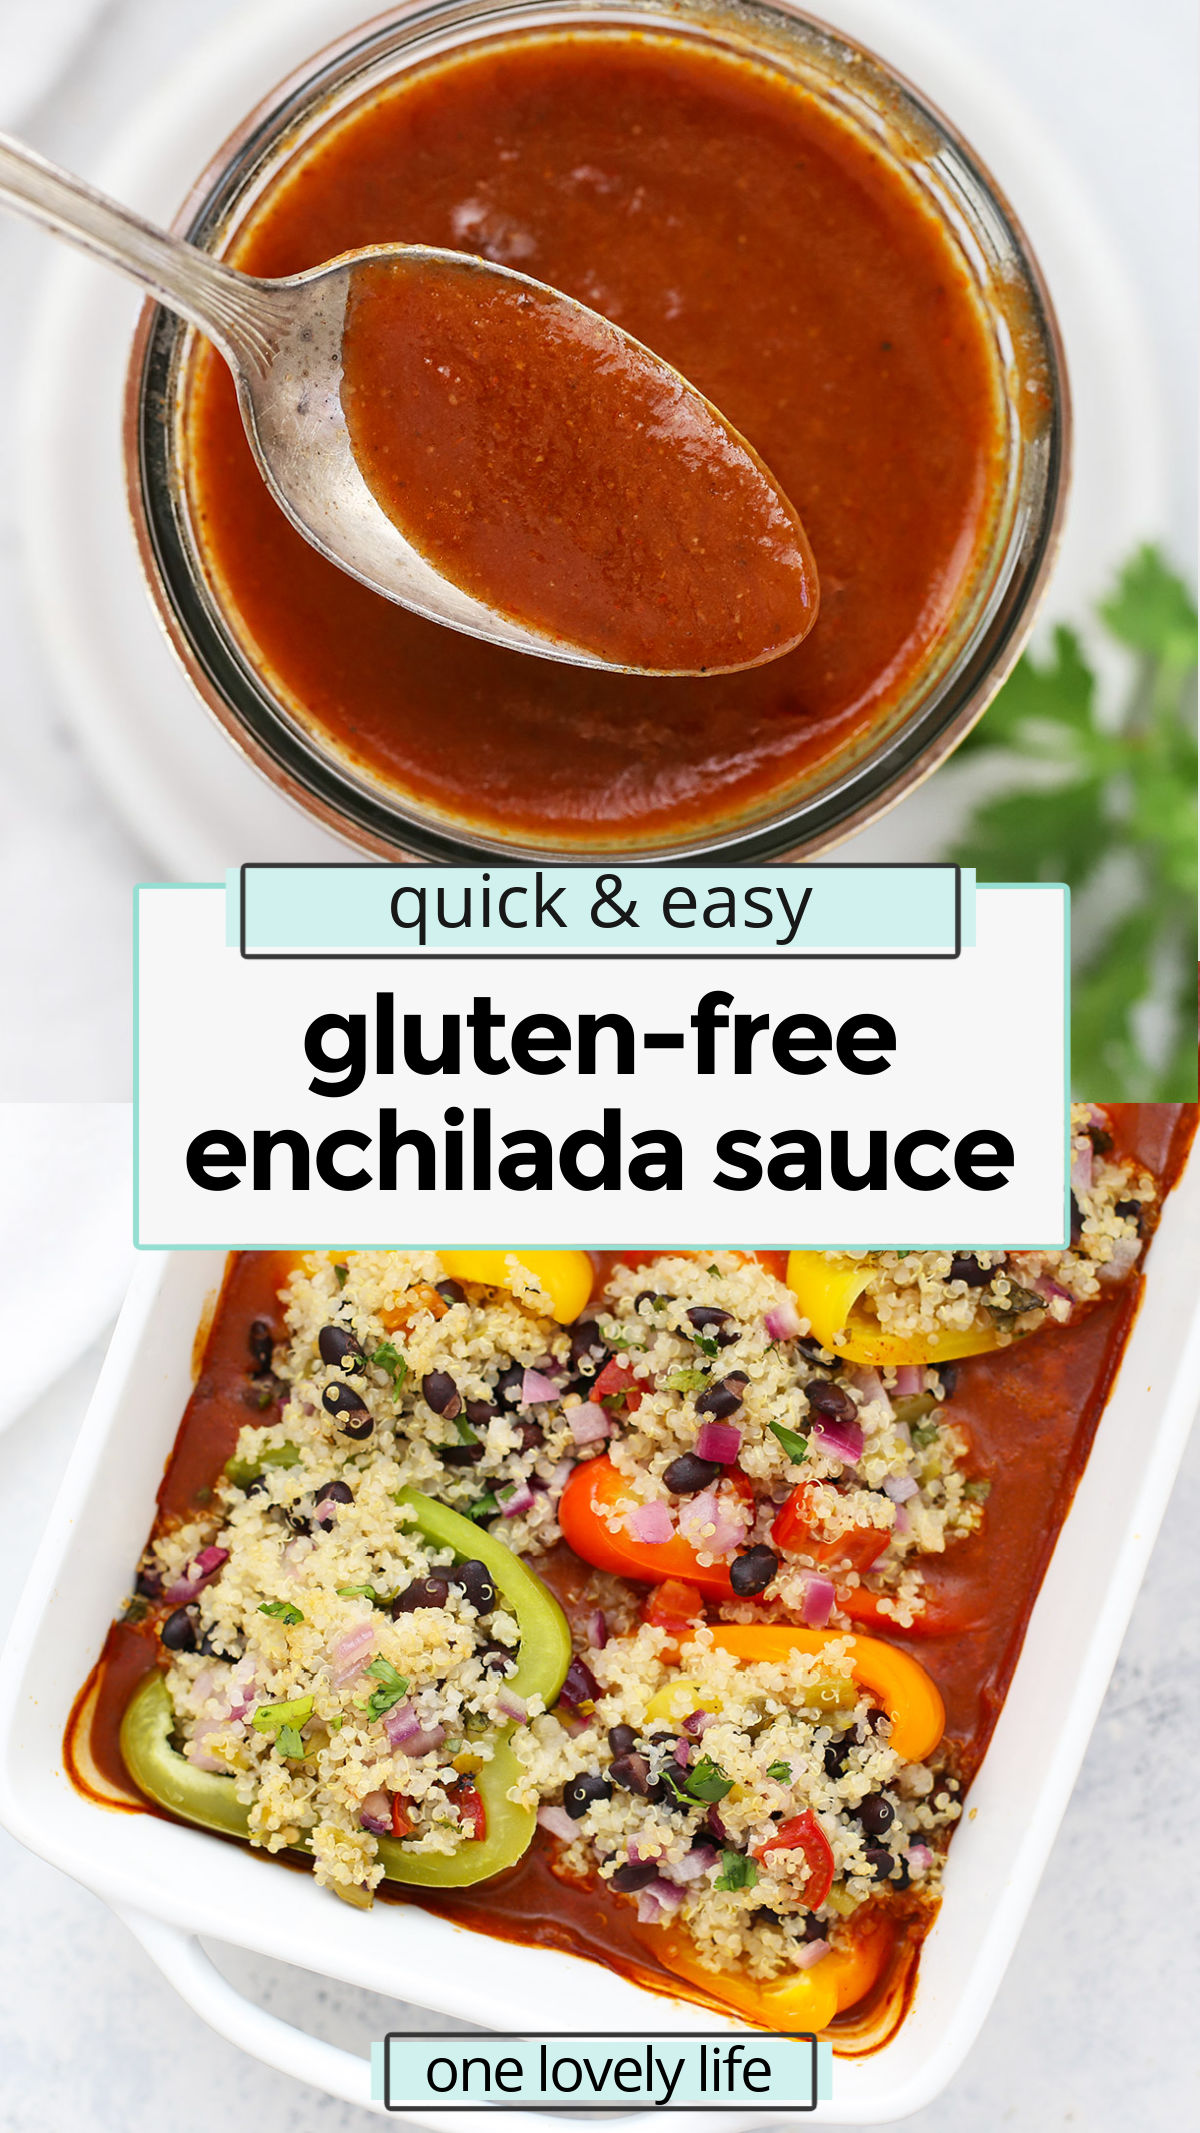 How To Make Gluten-Free Enchilada Sauce - This easy gluten-free enchilada sauce recipe is made from pantry staples and tastes AMAZING! / gluten-free red enchilada sauce / homemade gluten free enchilada sauce / homemade red enchilada sauce / homemade gluten free red enchilada sauce / how to make enchilada sauce / the best gluten free enchilada sauce / what brands of enchilada sauce are gluten free